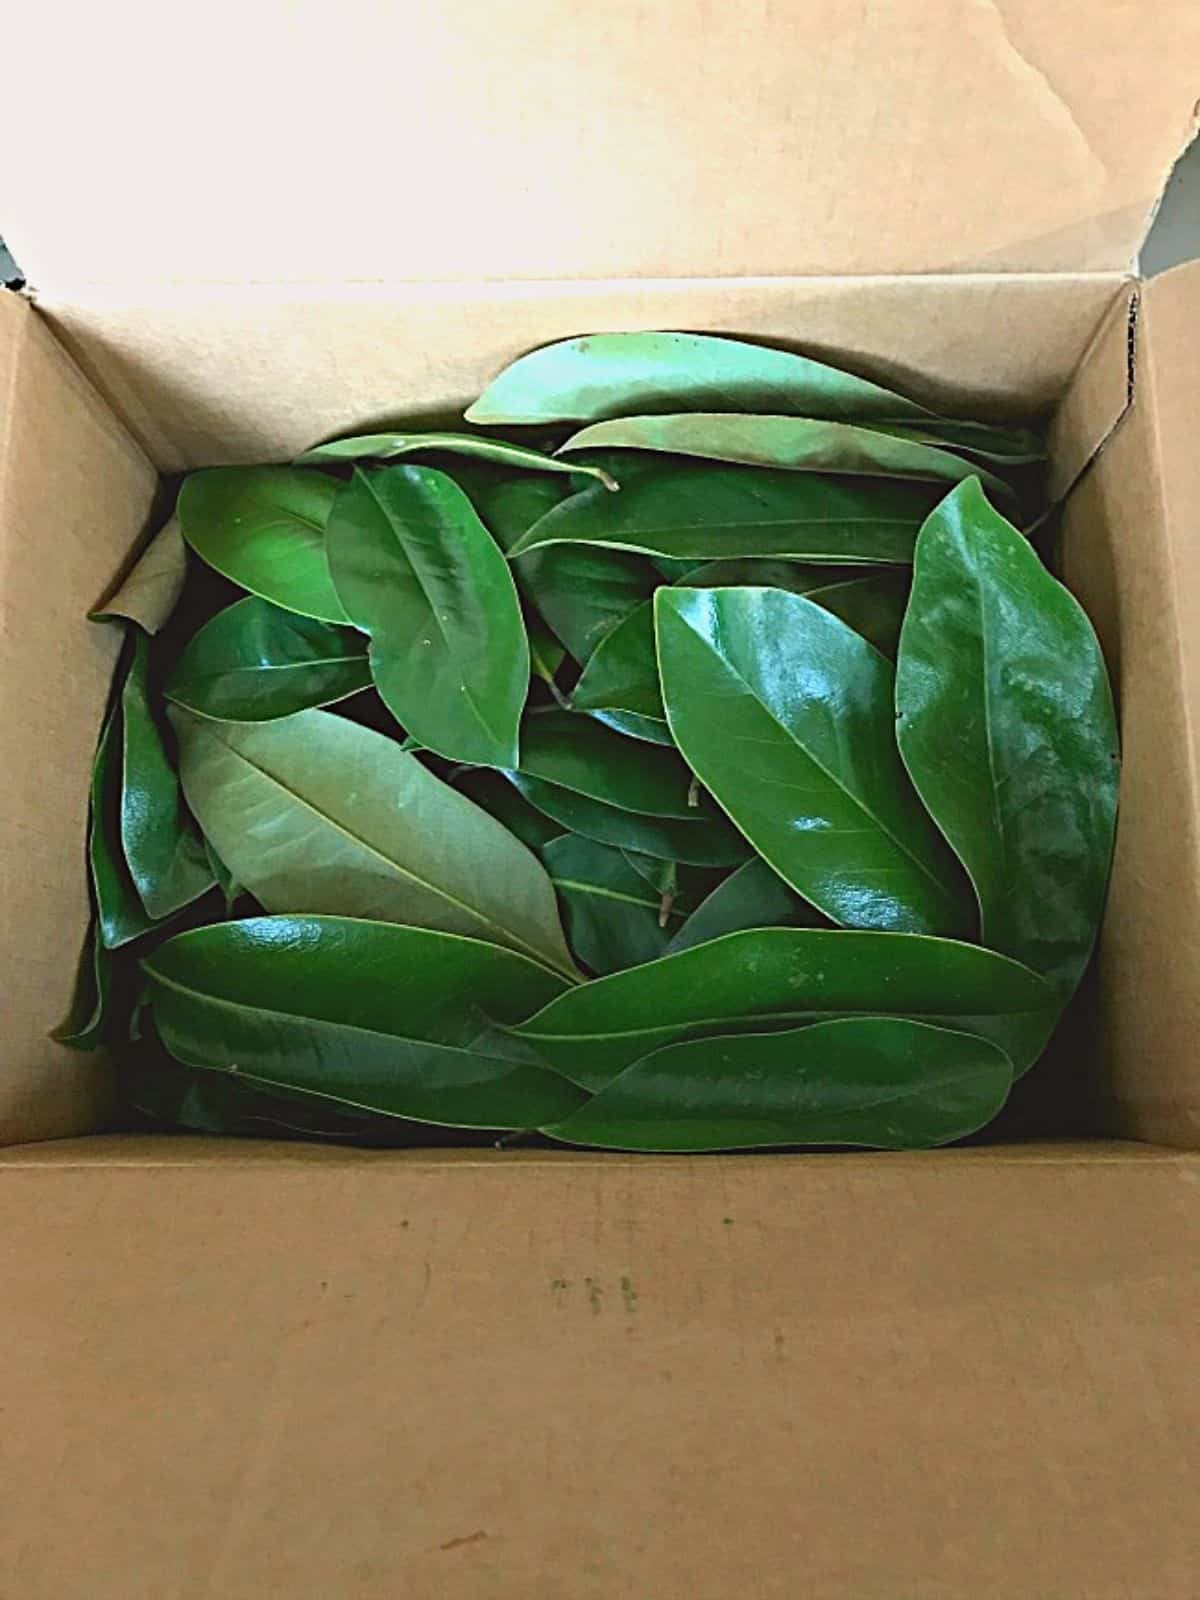 fresh magnolia leaves in a box